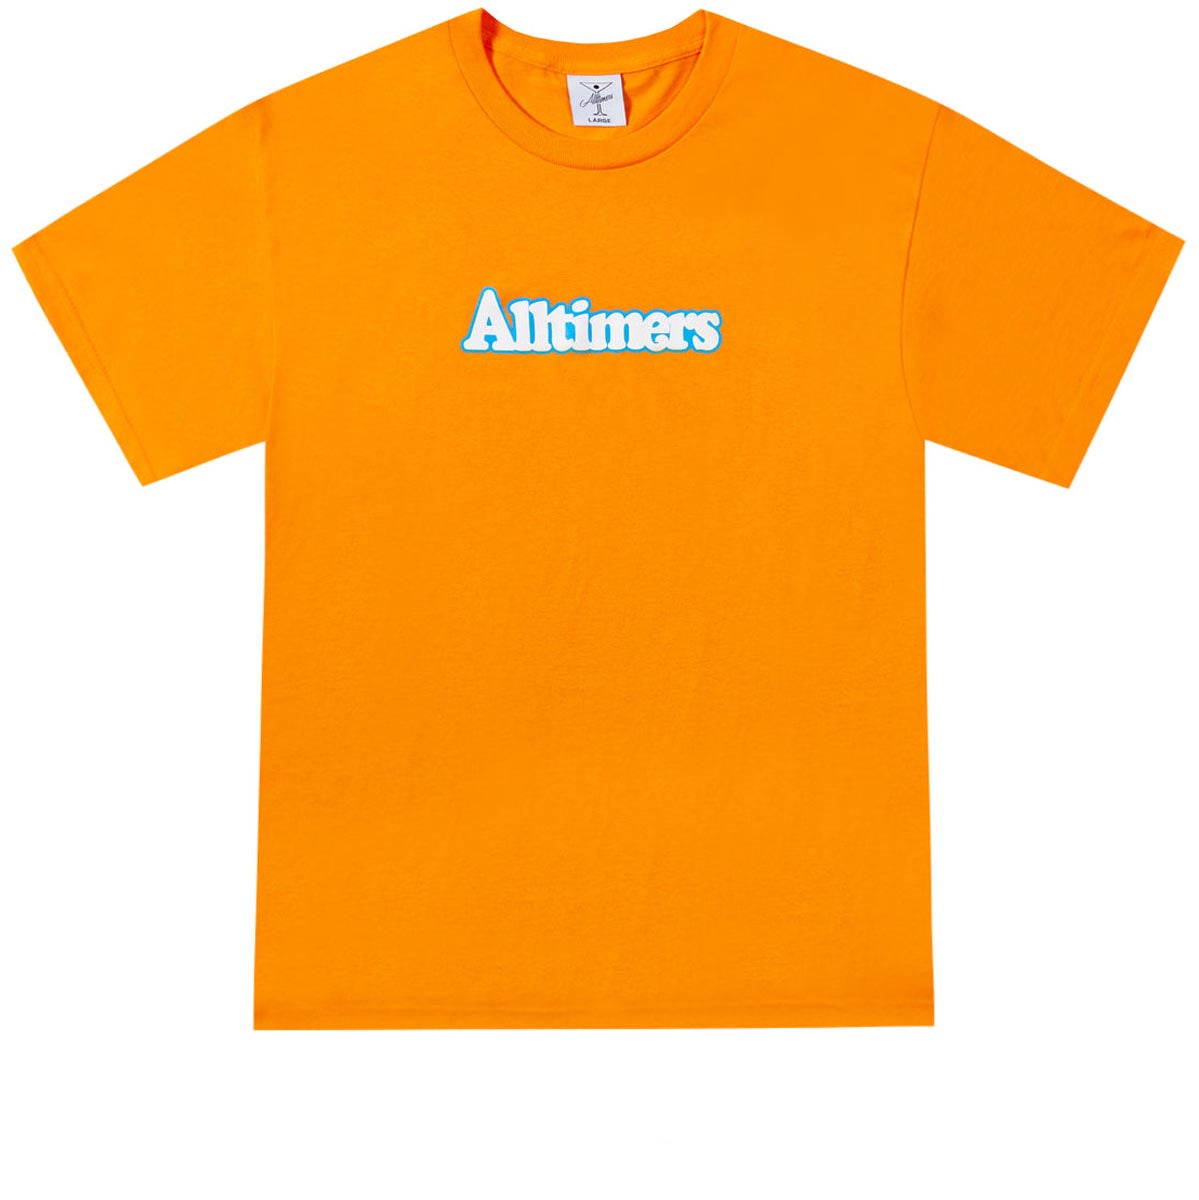 Alltimers Broadway T-Shirt - Orange image 1